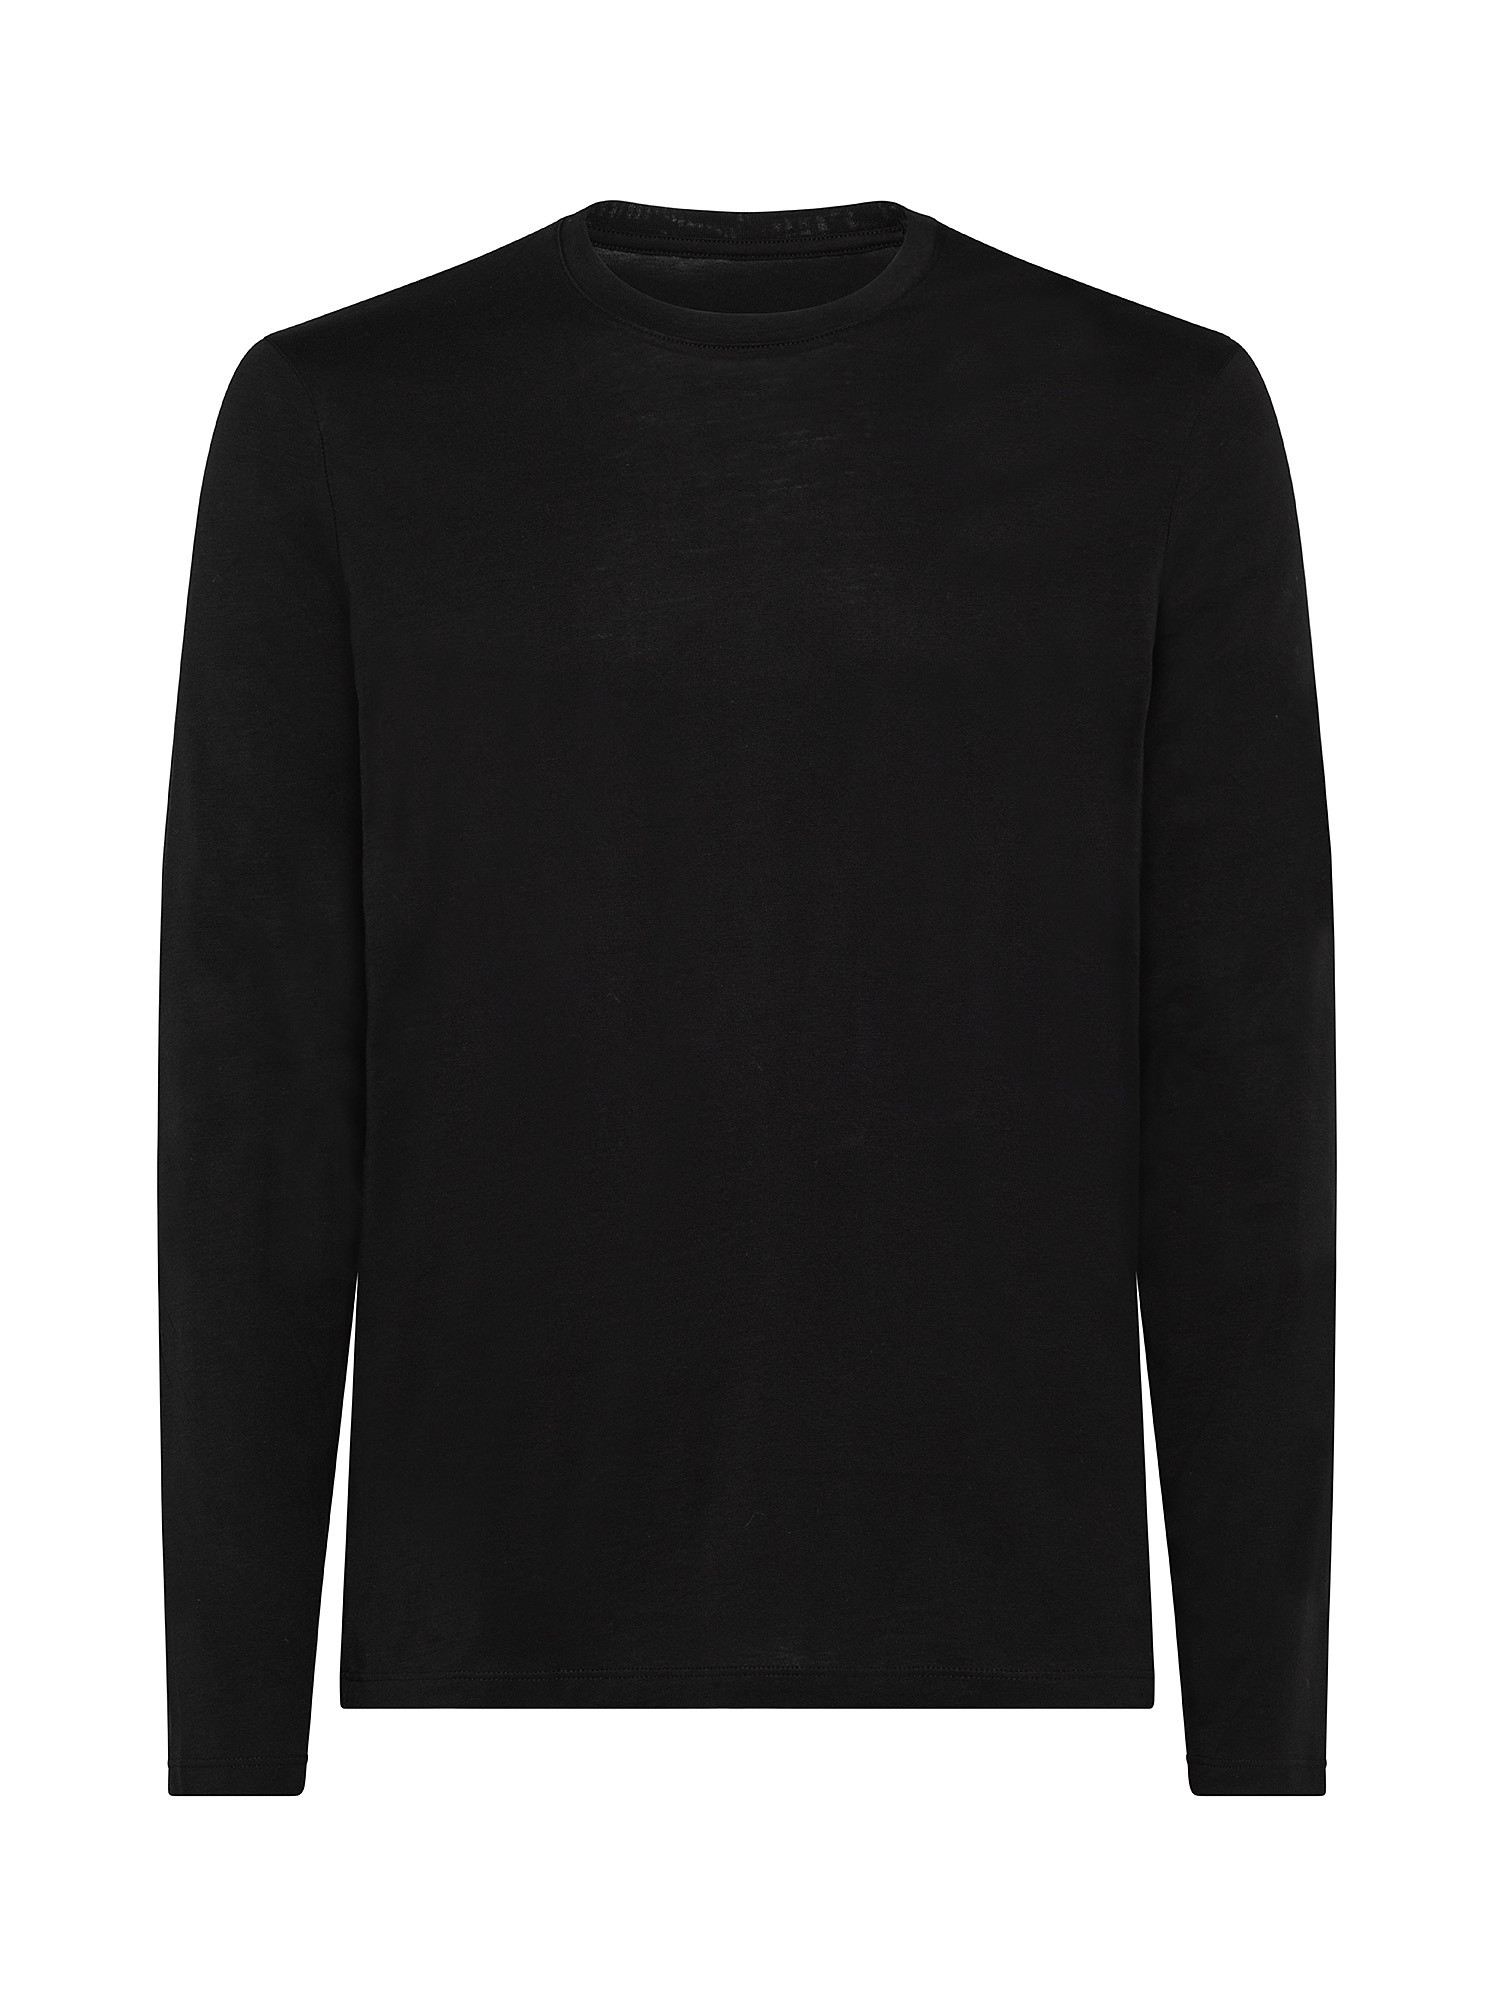 Sweater, Black, large image number 0